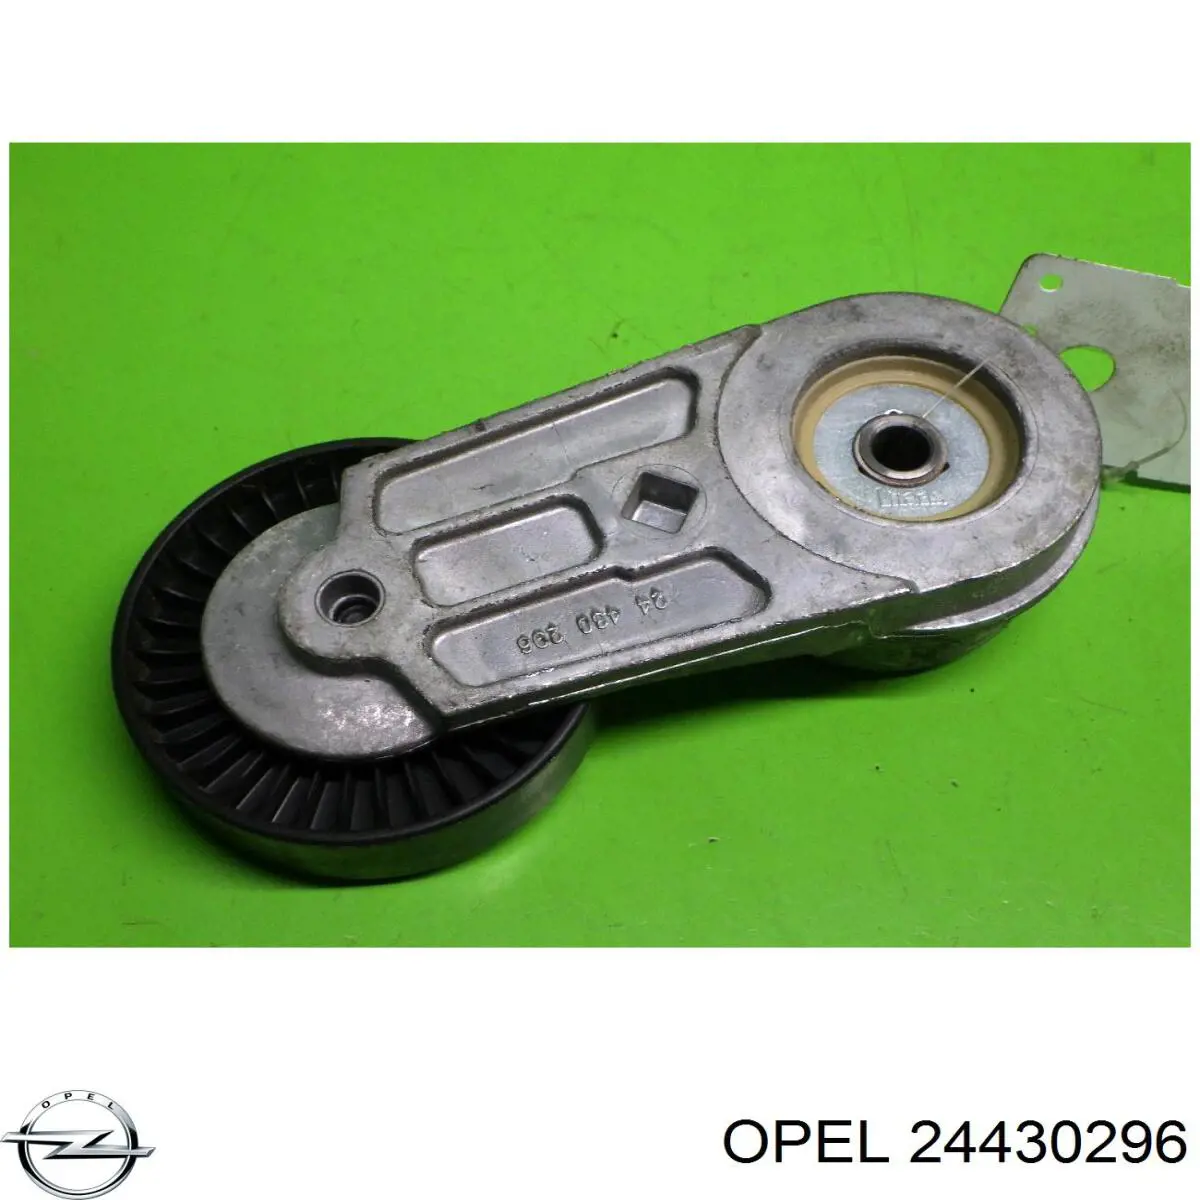 24430296 Opel tensor de correa, correa poli v